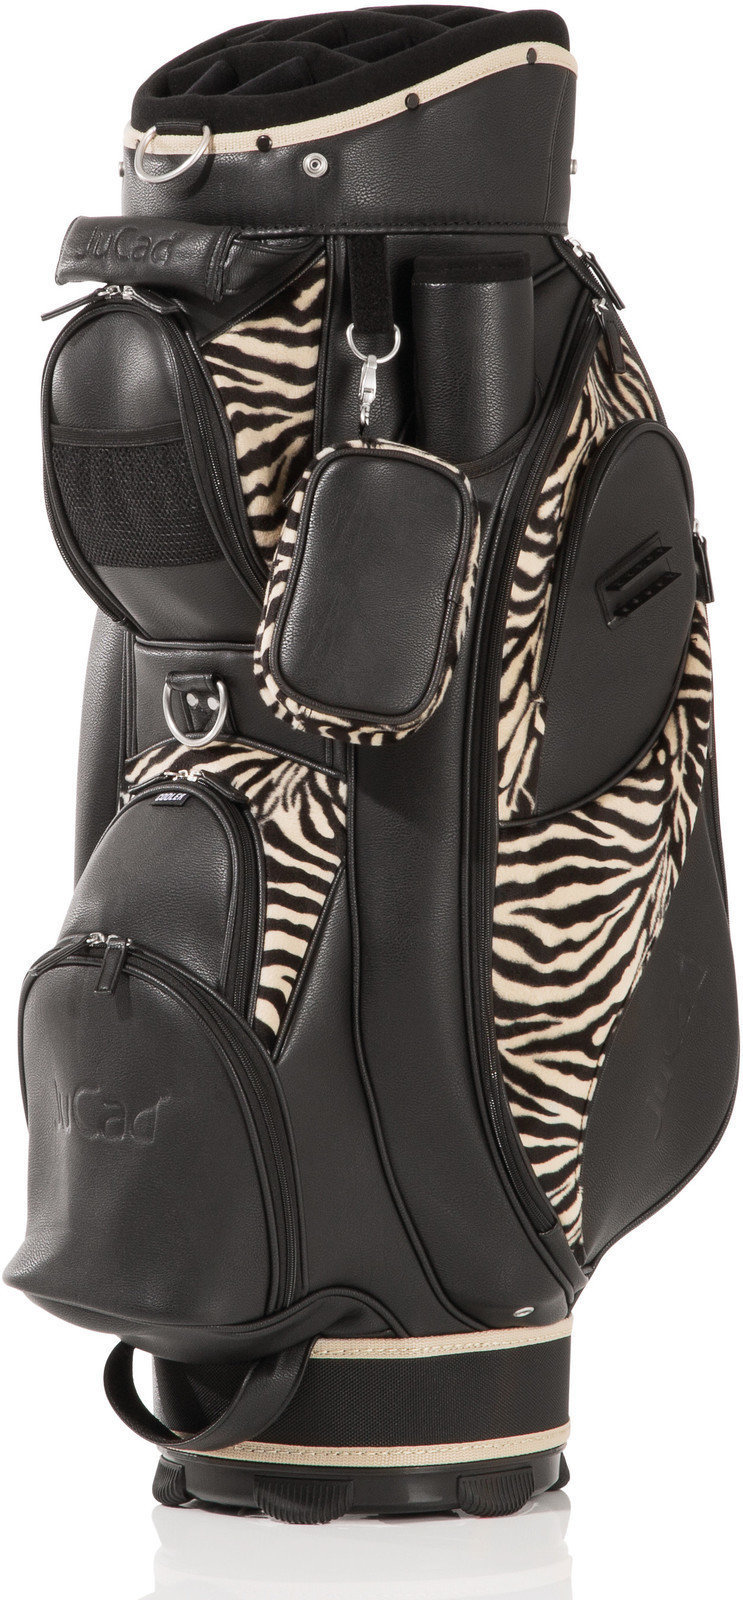 Bolsa de golf Jucad Style Black/Zebra Cart Bag